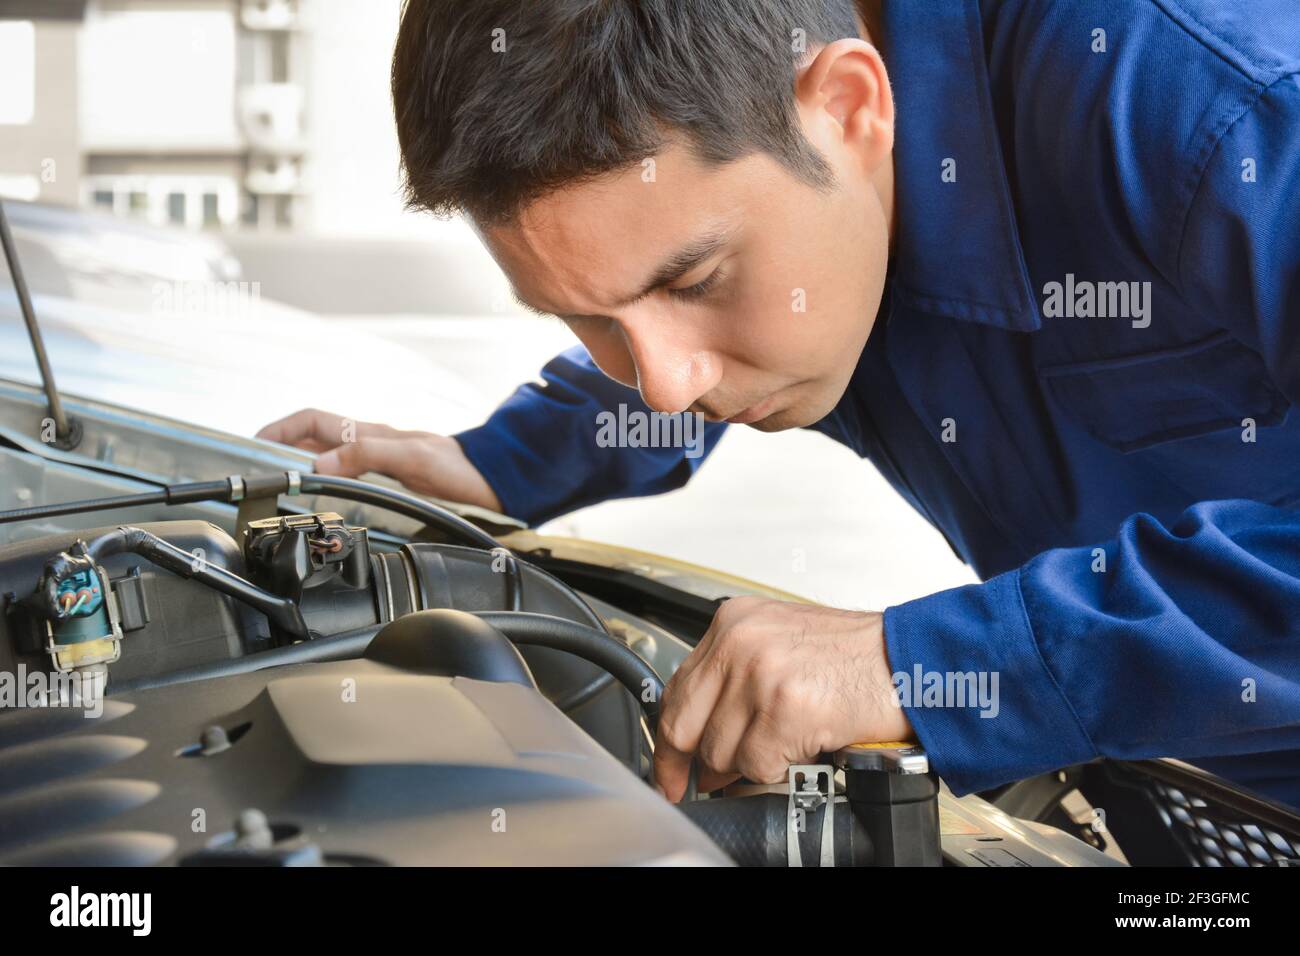 Auto mechanic checking car engine Stock Photo